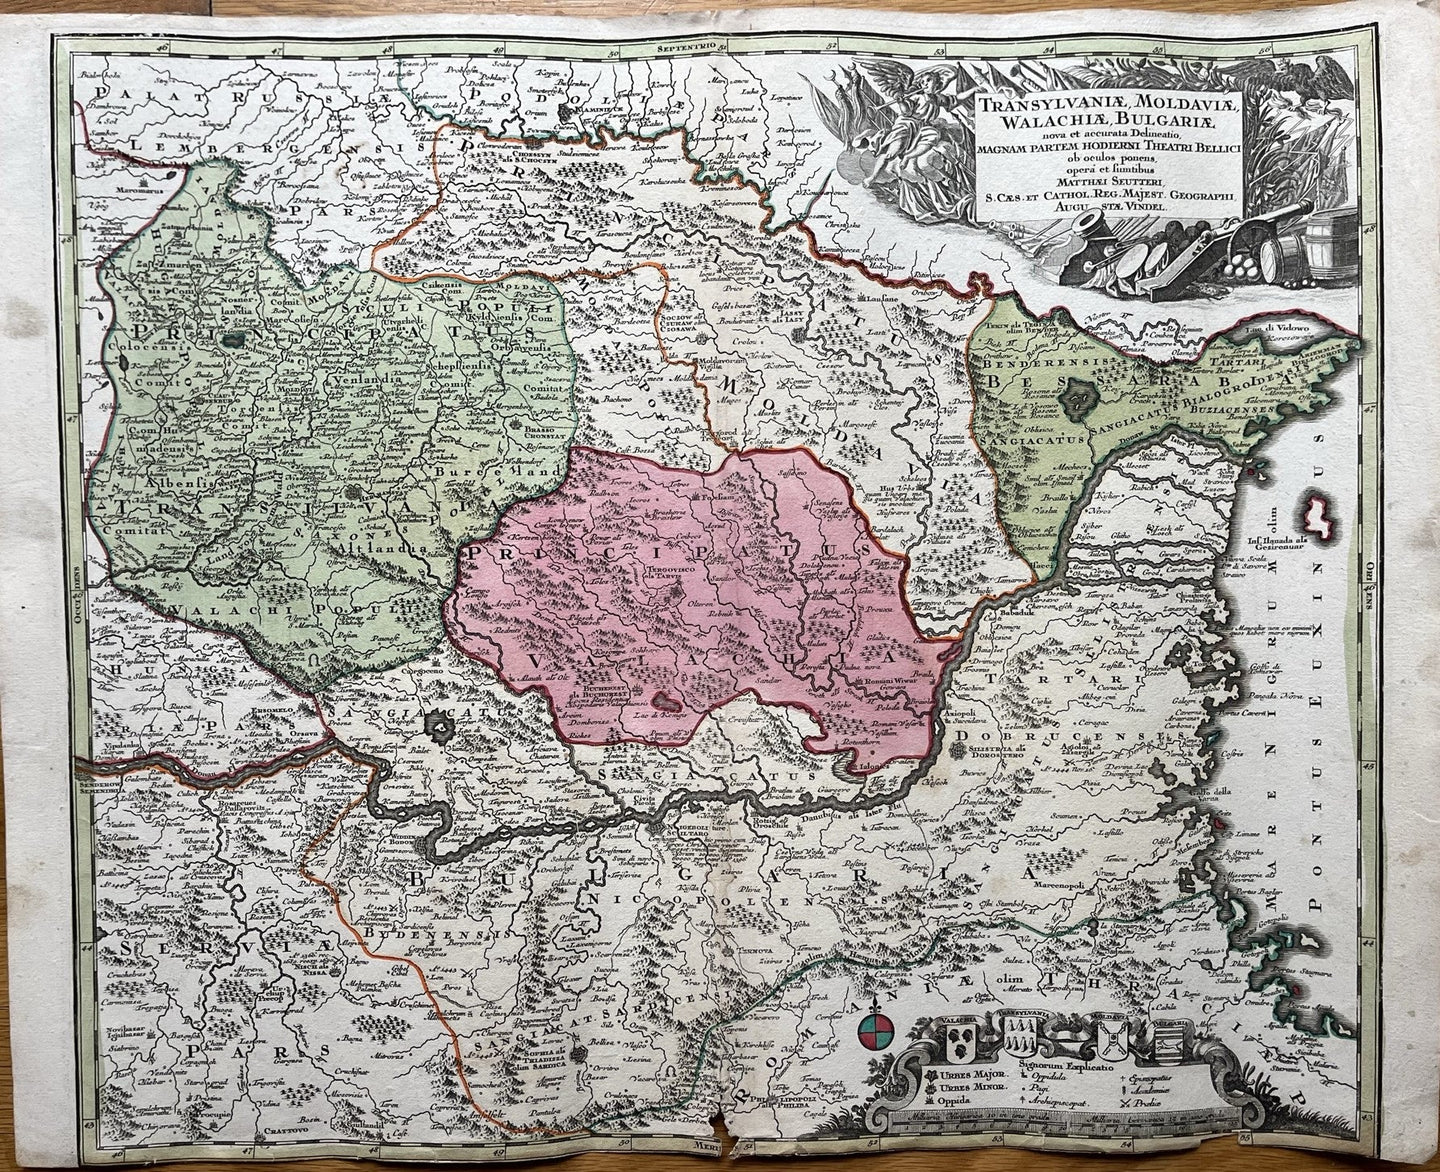 Genuine-Antique-Hand-colored-Map-Transylvaniae-Modaviae-Walchiae-Bulgariae--Seutter-Maps-Of-Antiquity